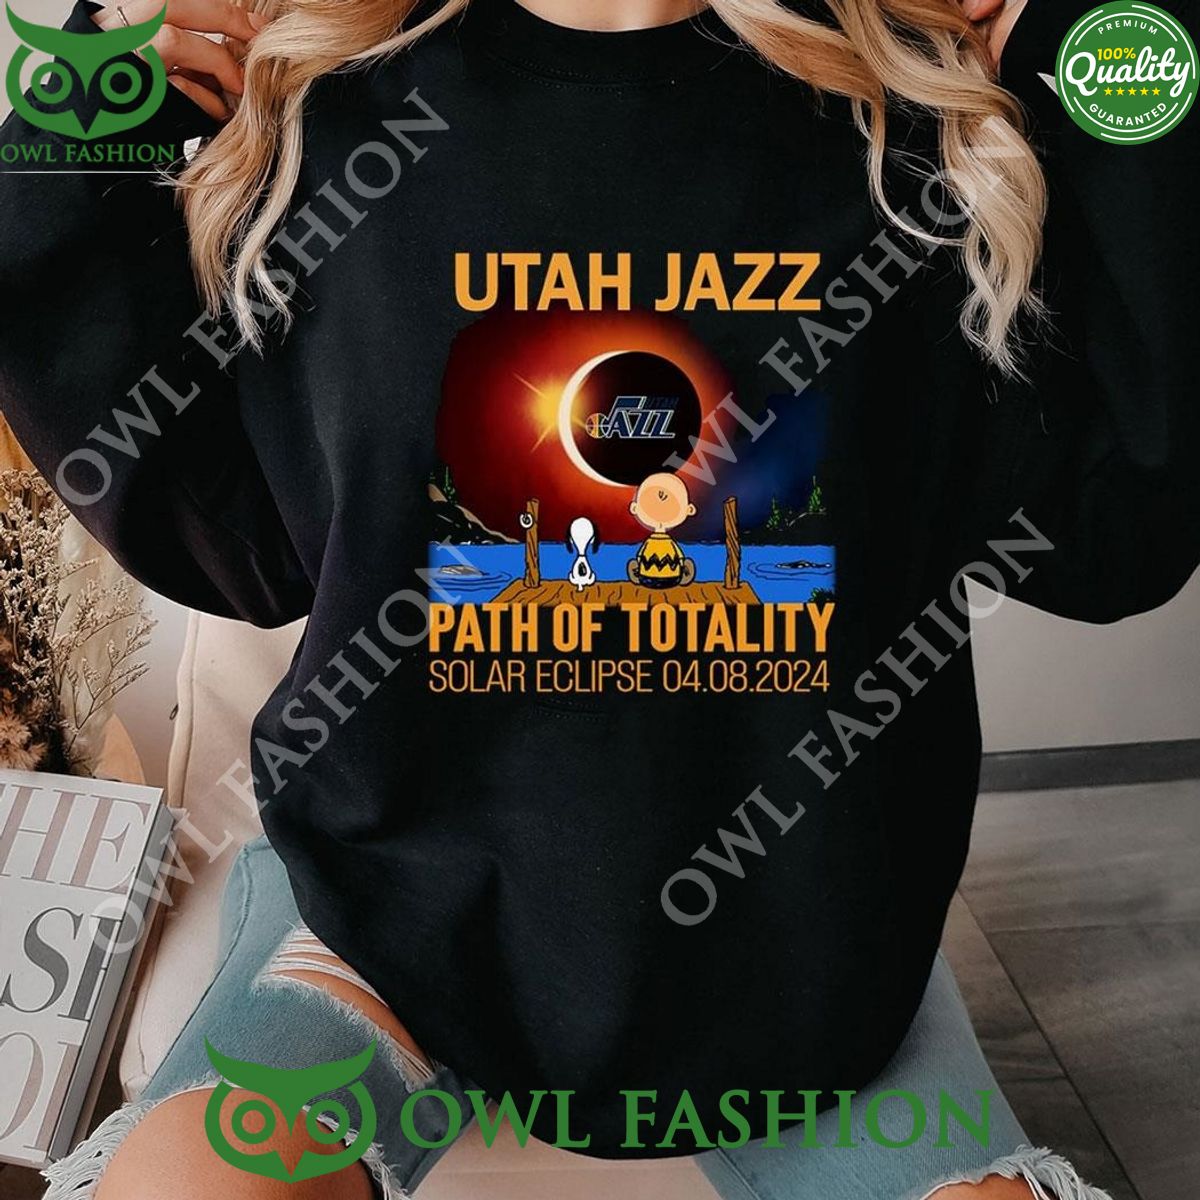 utah jazz path of totality solar eclipse nba 2024 sweatshirt 1 QwalJ.jpg